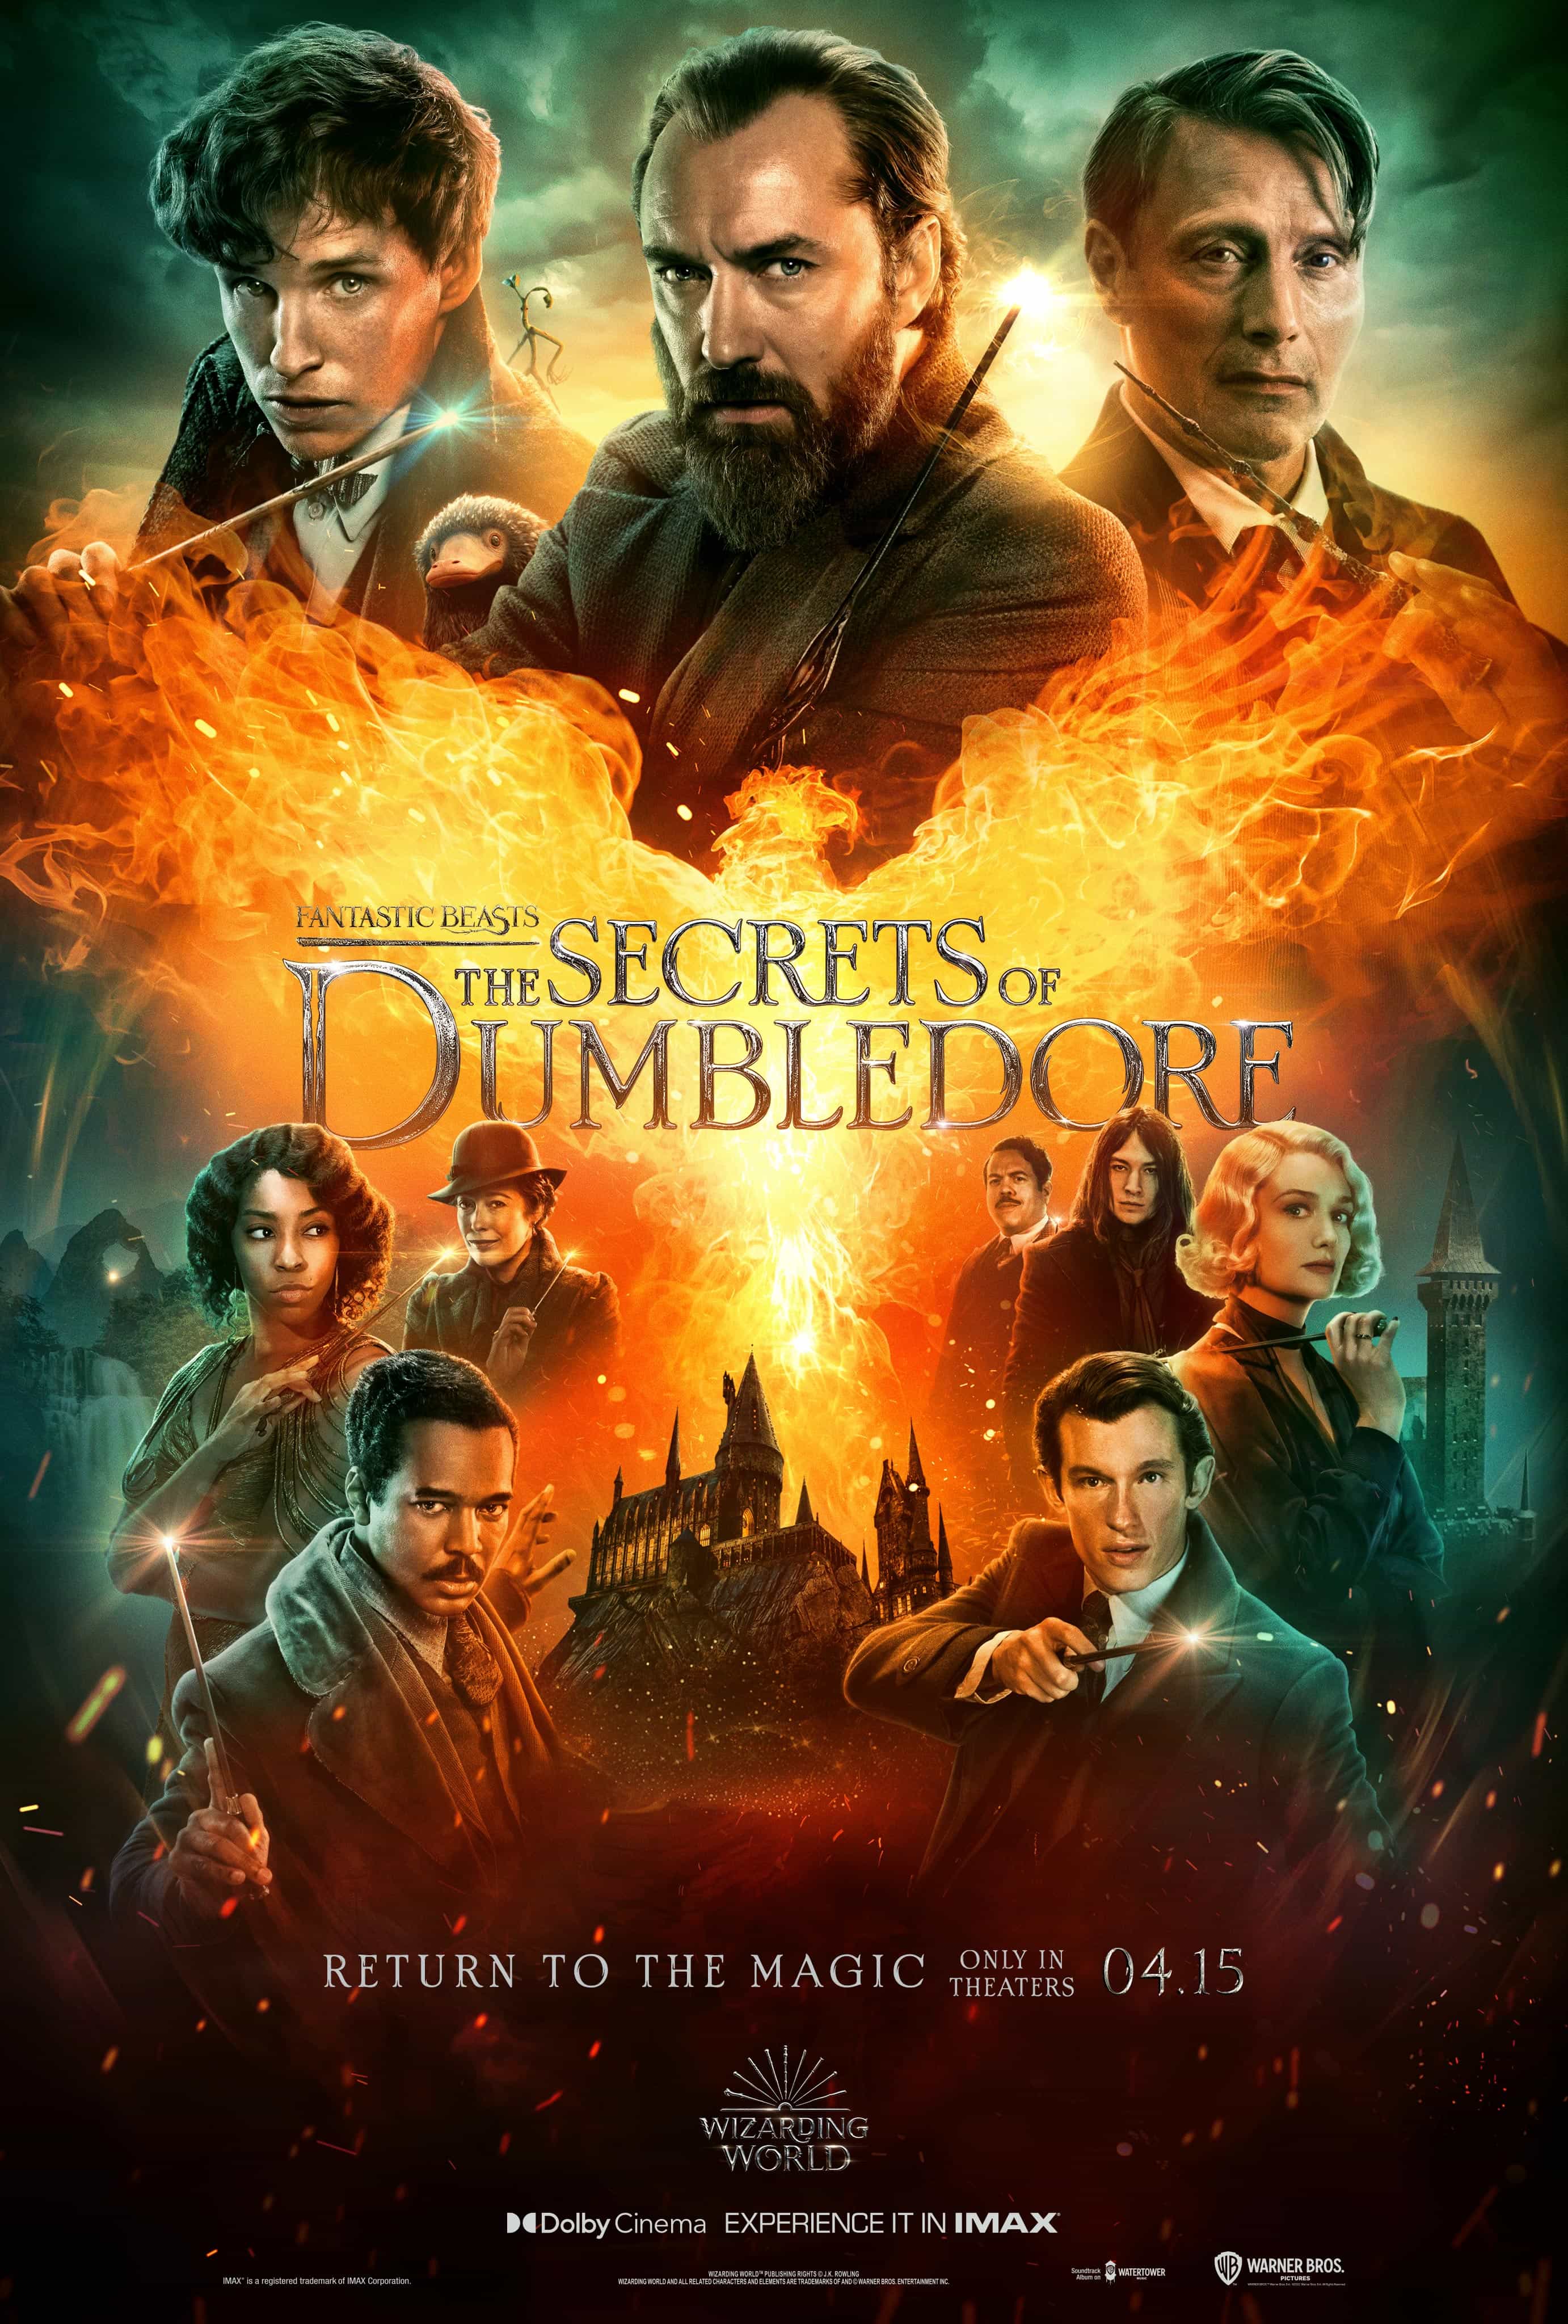 New trailer for Warner Bros. Fantastic Beasts: The Secrets of Dumbledore - UK release date 8th April 2022